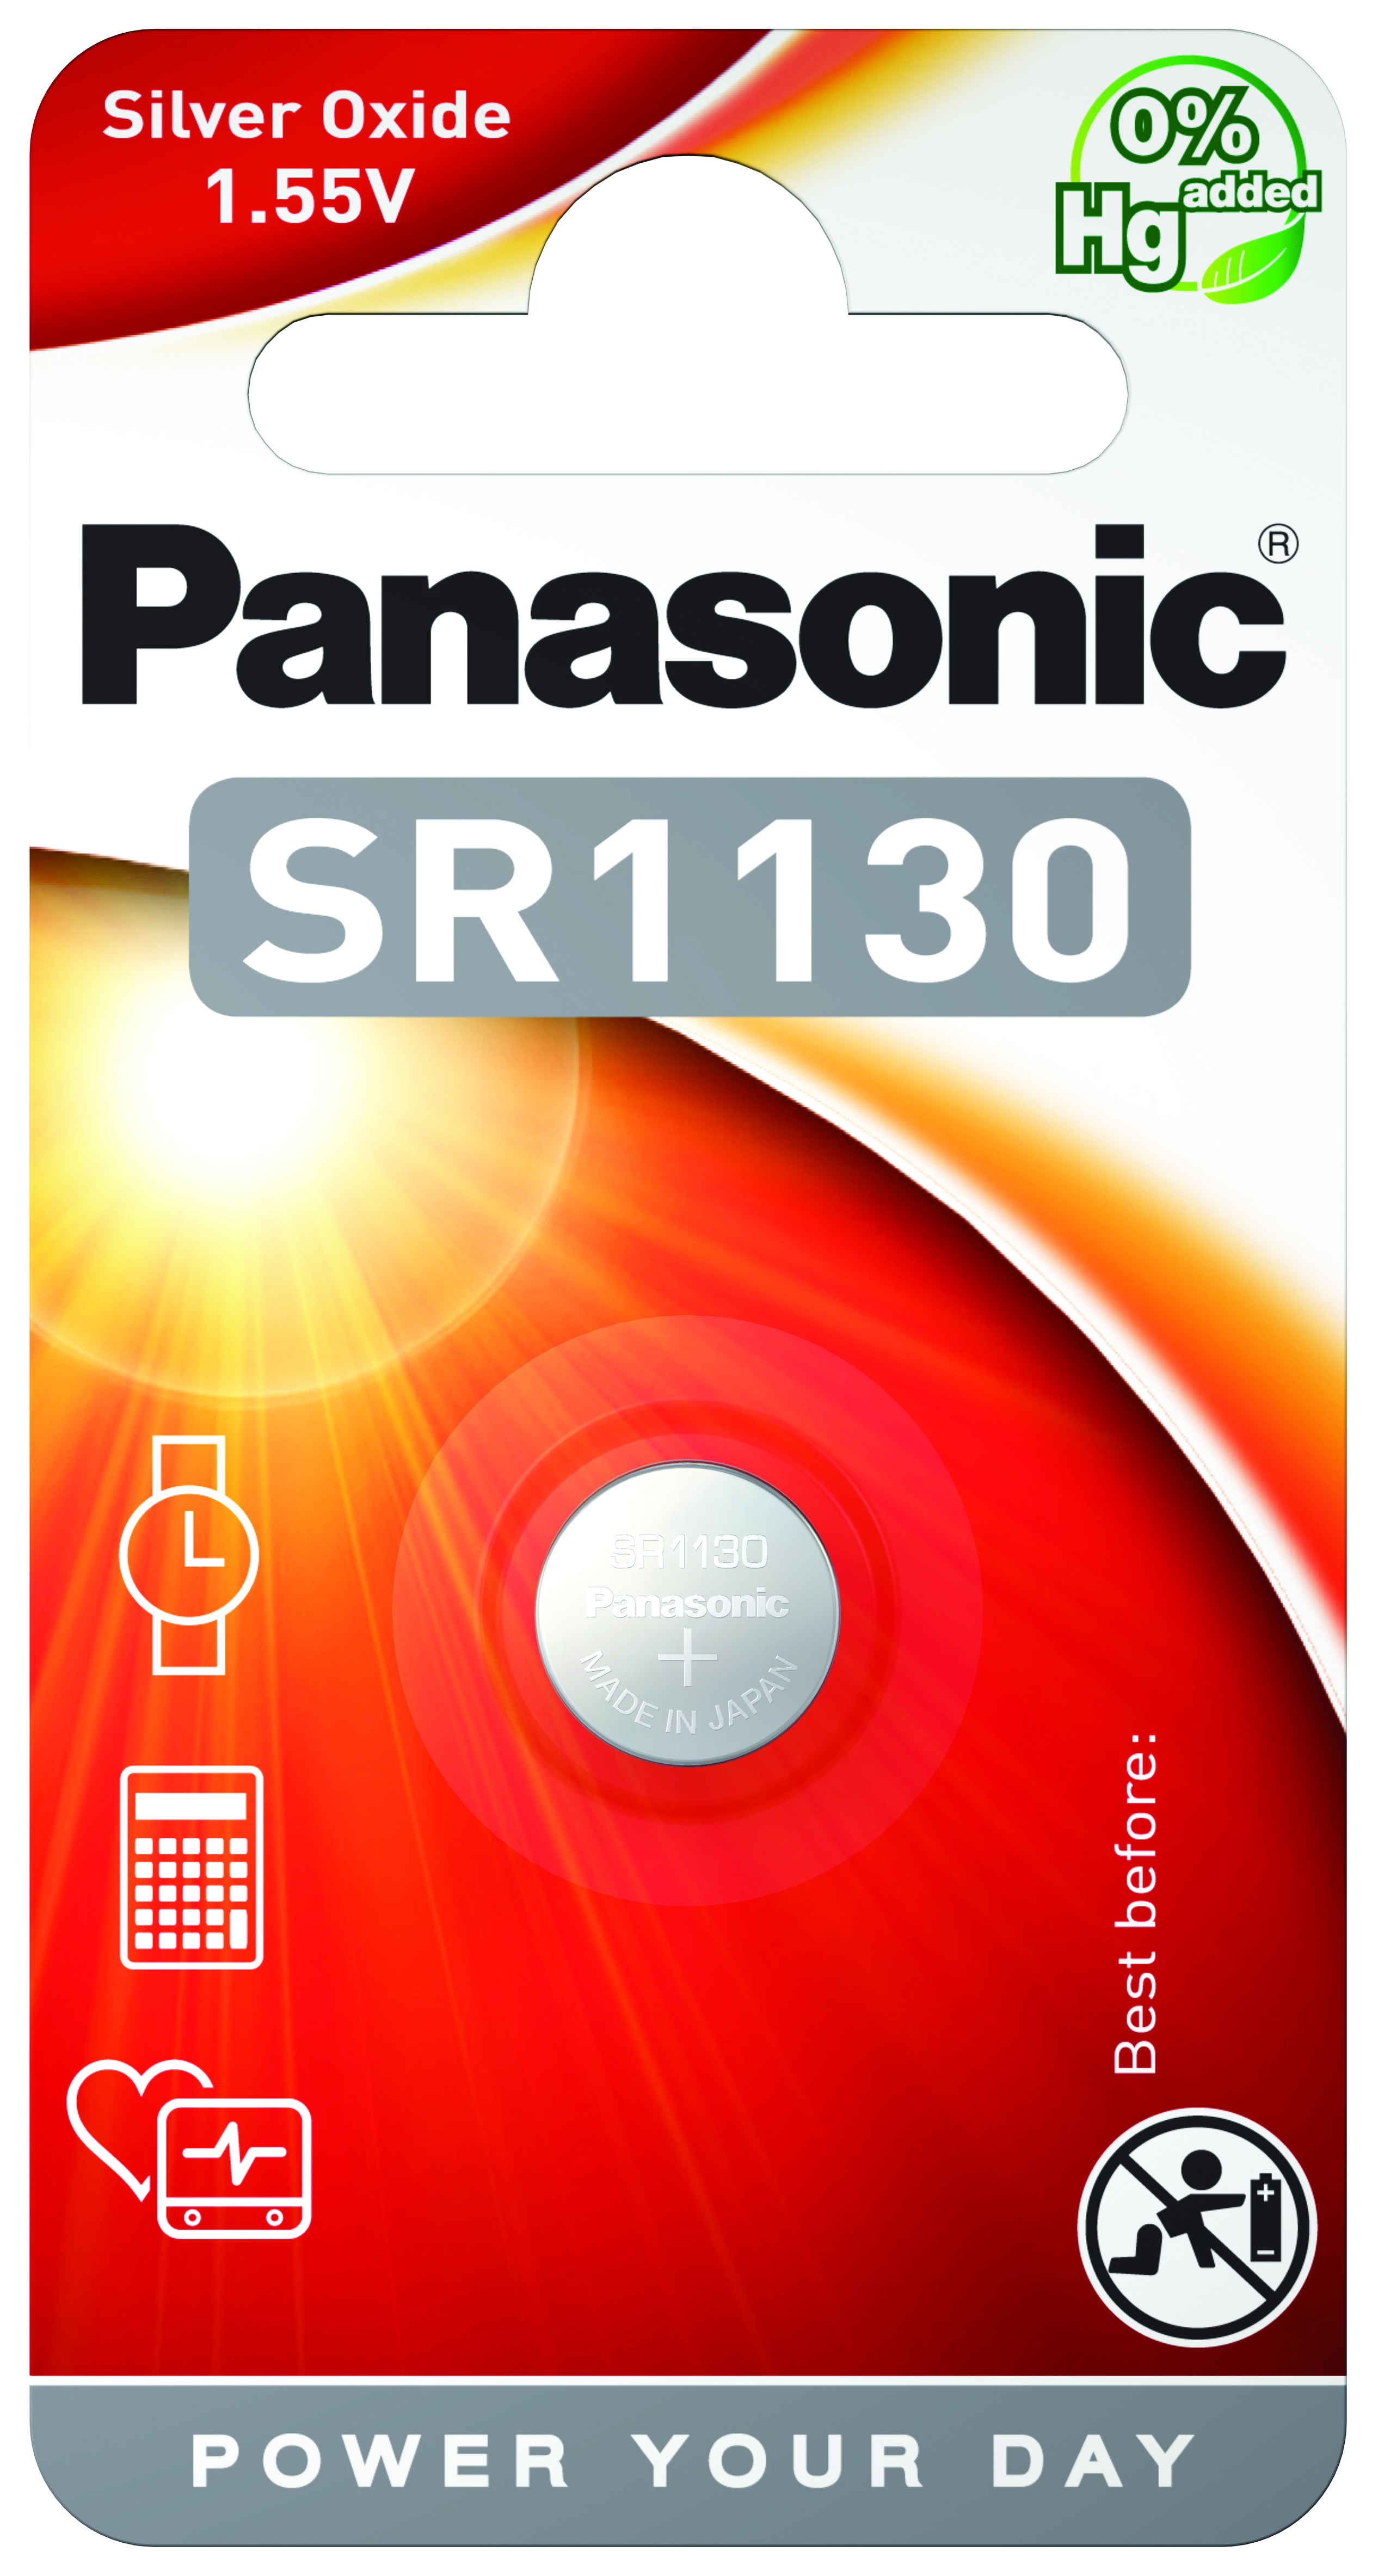 Panasonic SR1130 (Silberoxid/Uhrenbatterien)